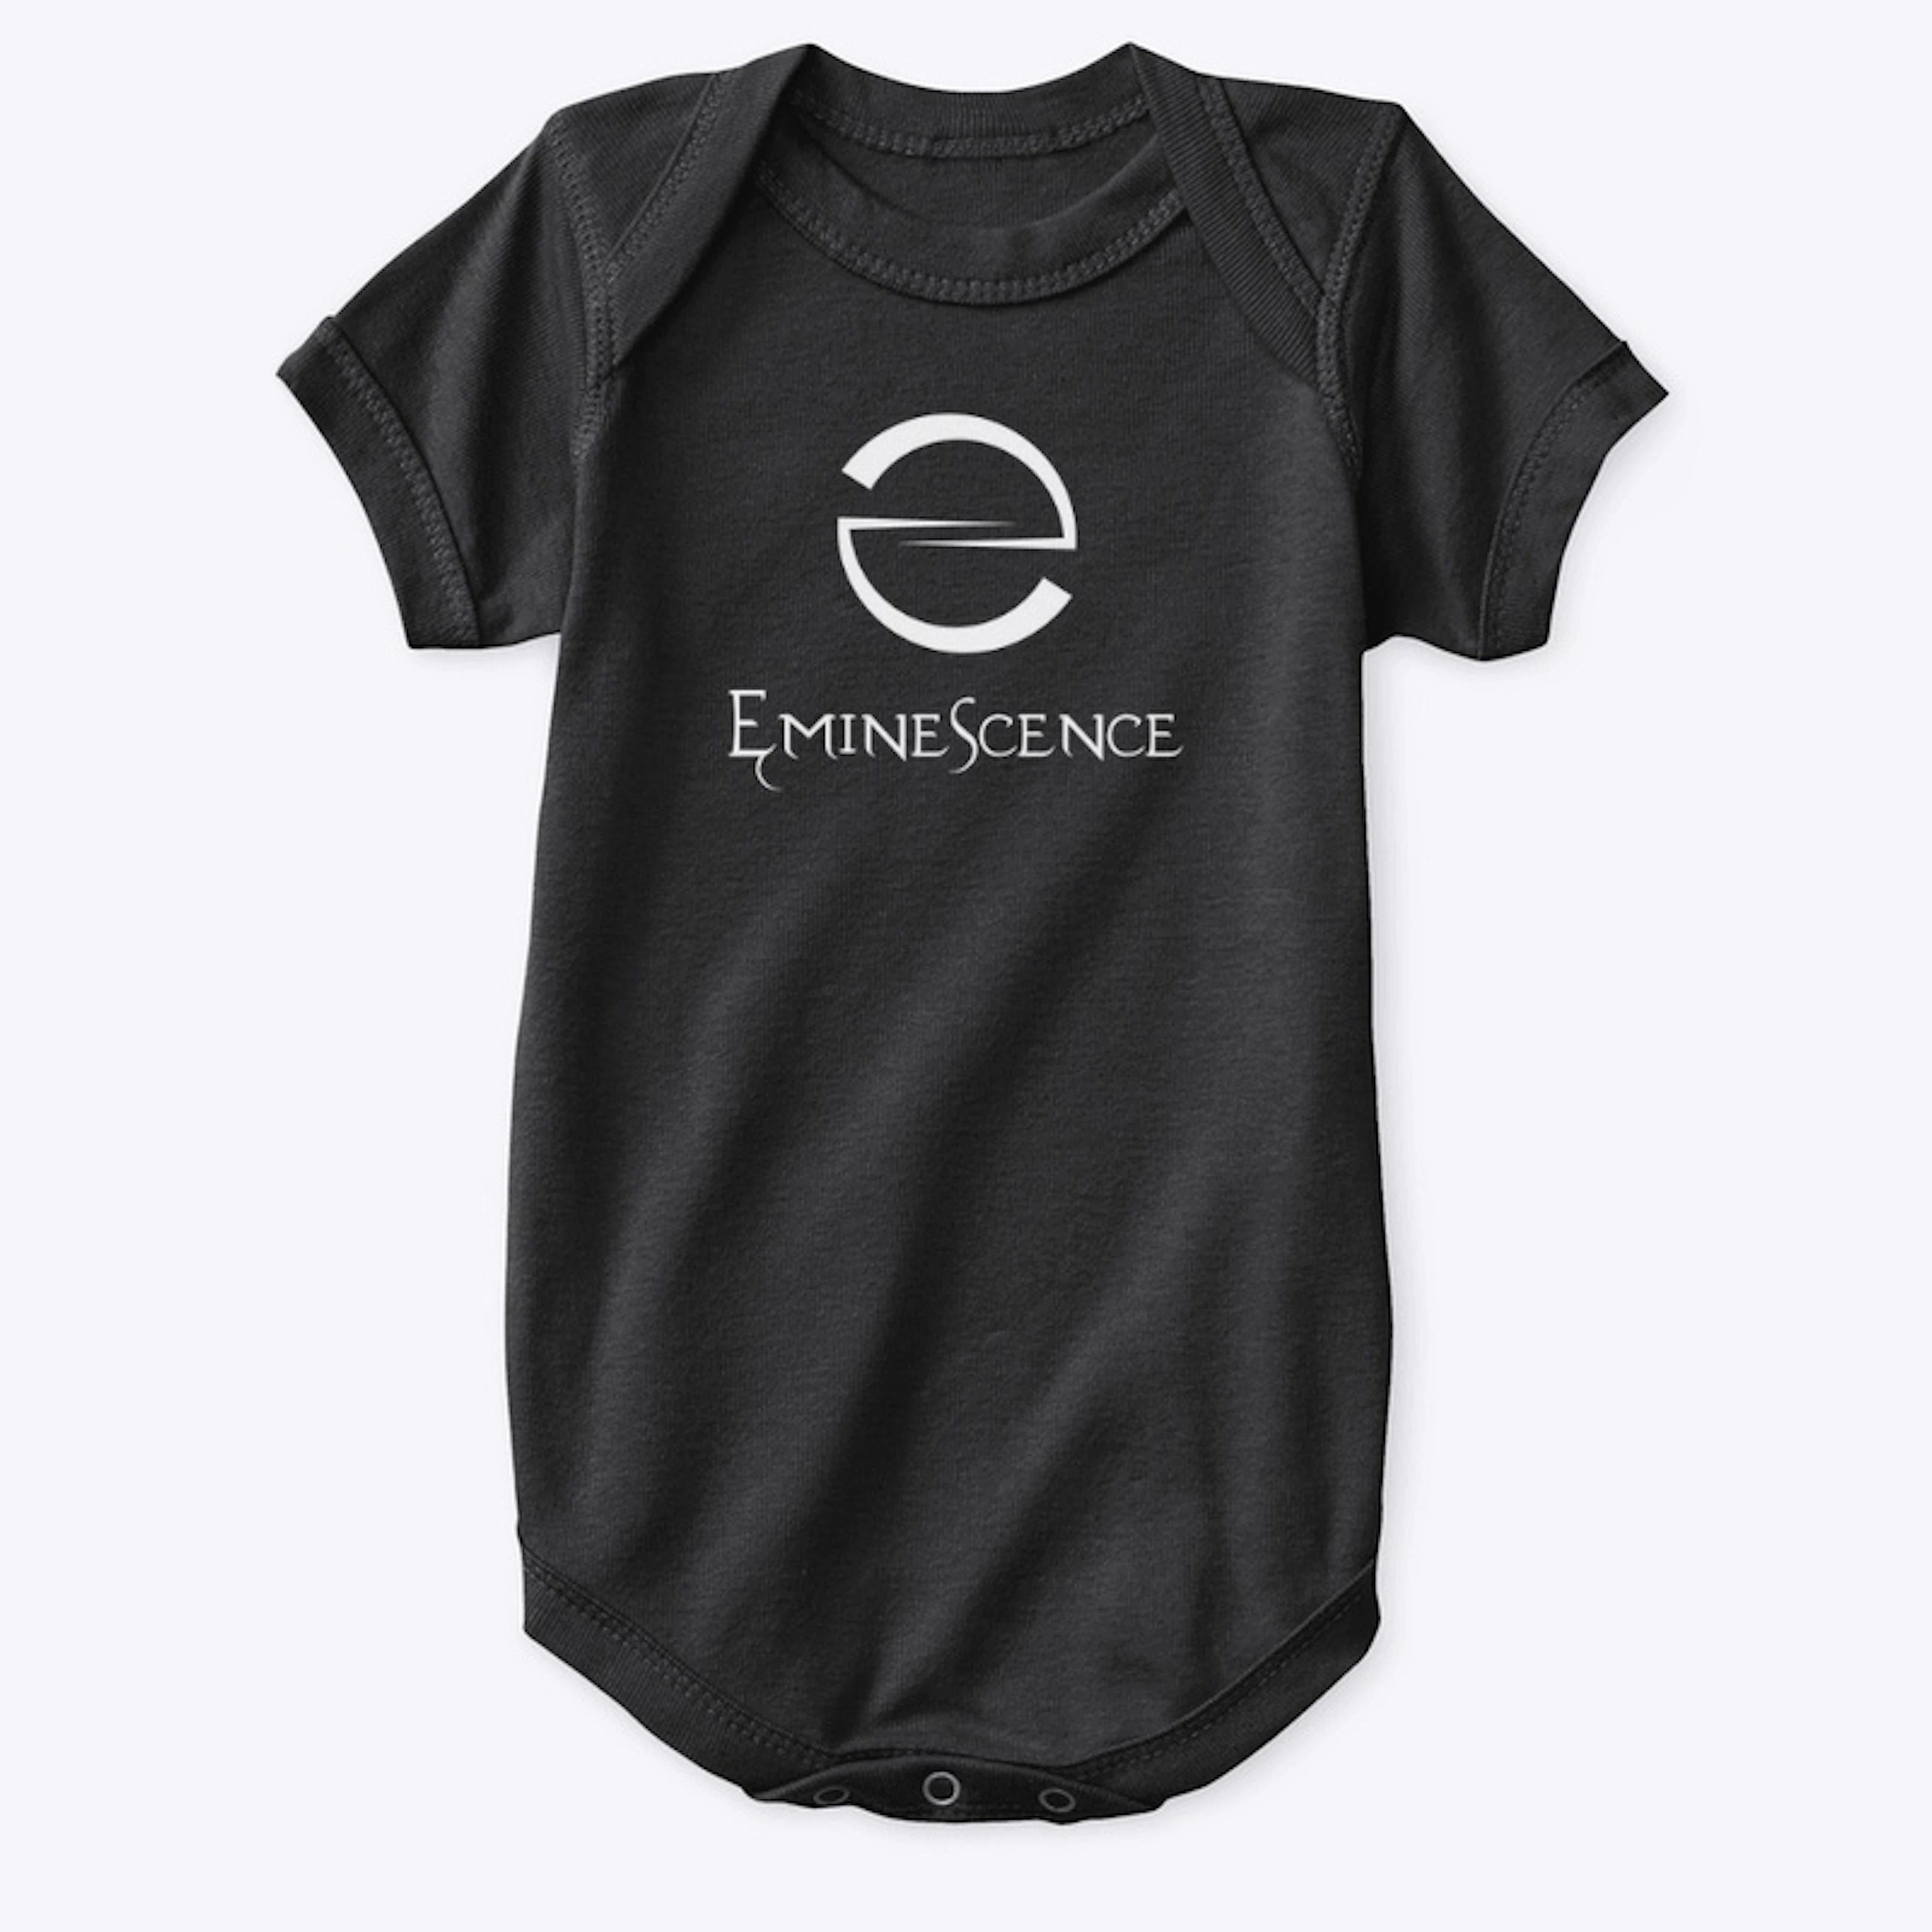 “Eminescence Logo” Baby Onesie